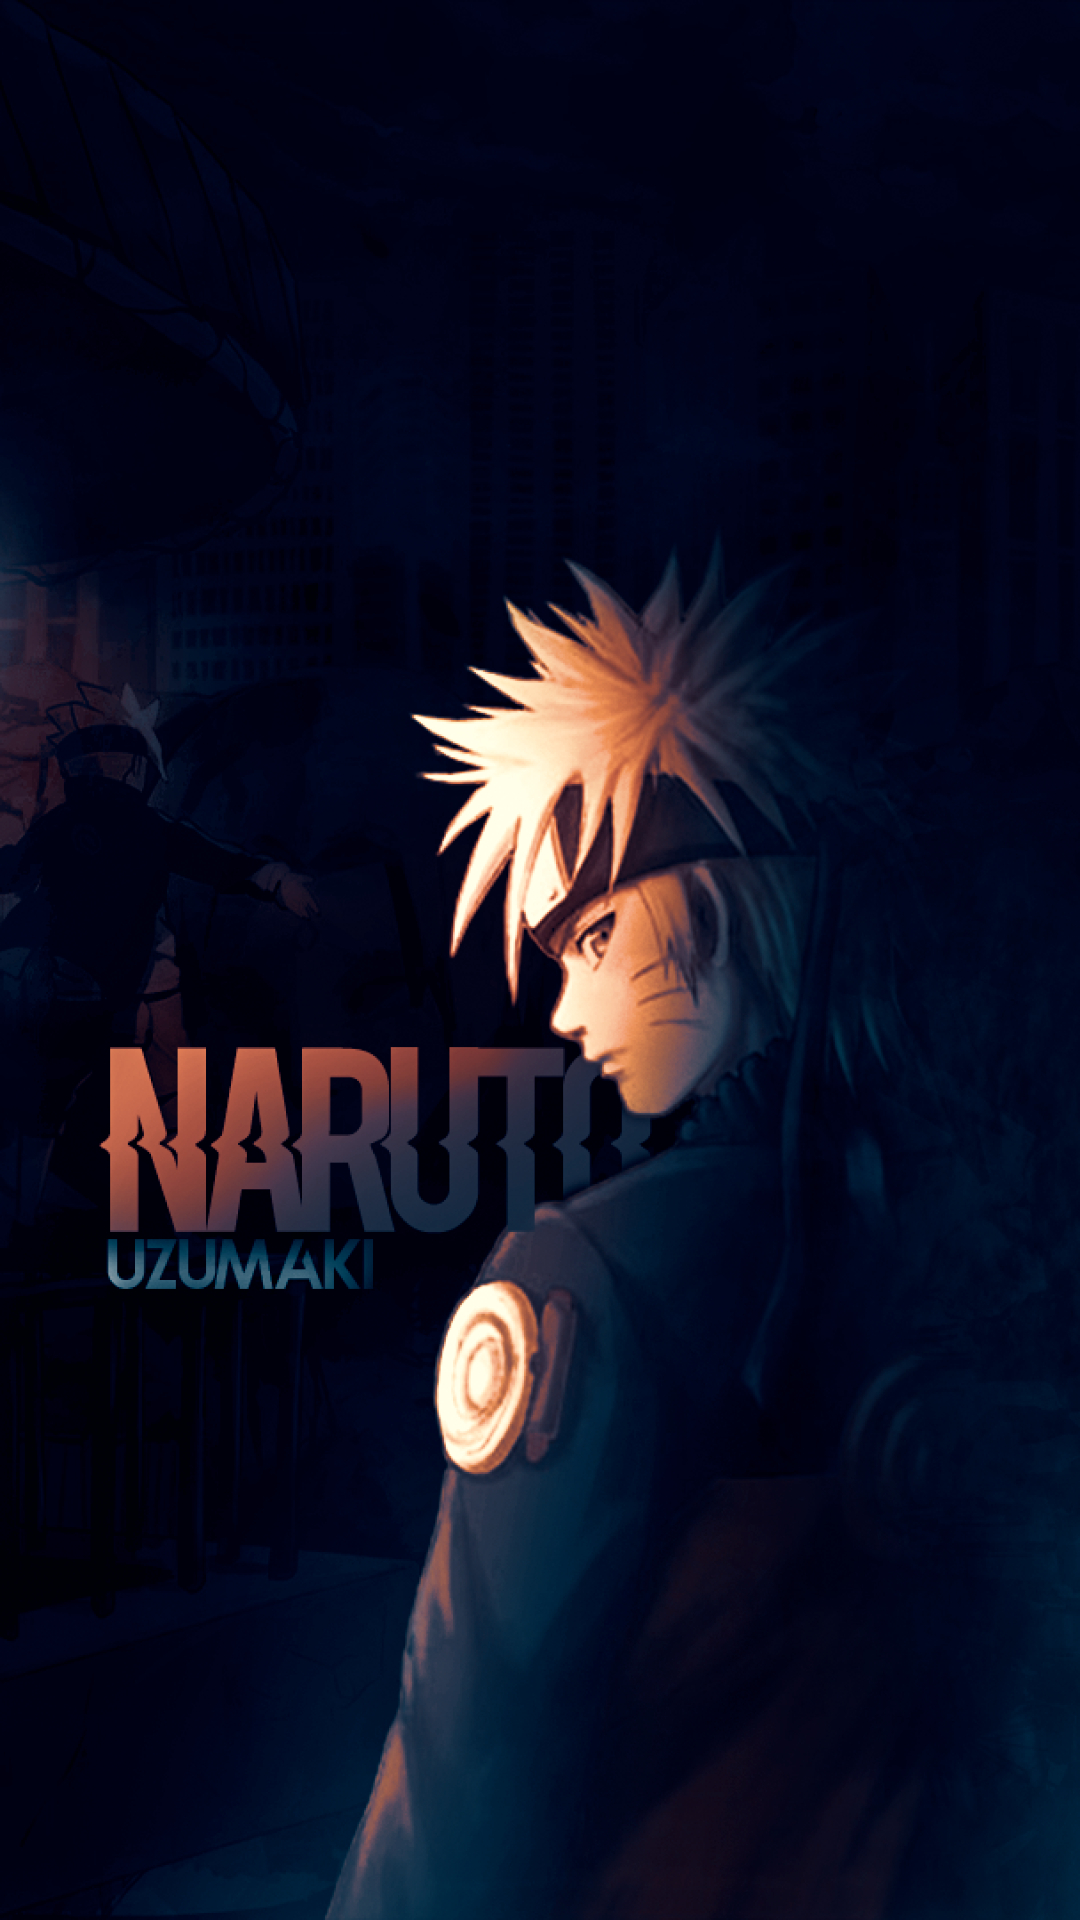 1080x1920 Naruto Uzumaki Wallpapers Top 35 Best Naruto Uzumaki Backgrounds Download